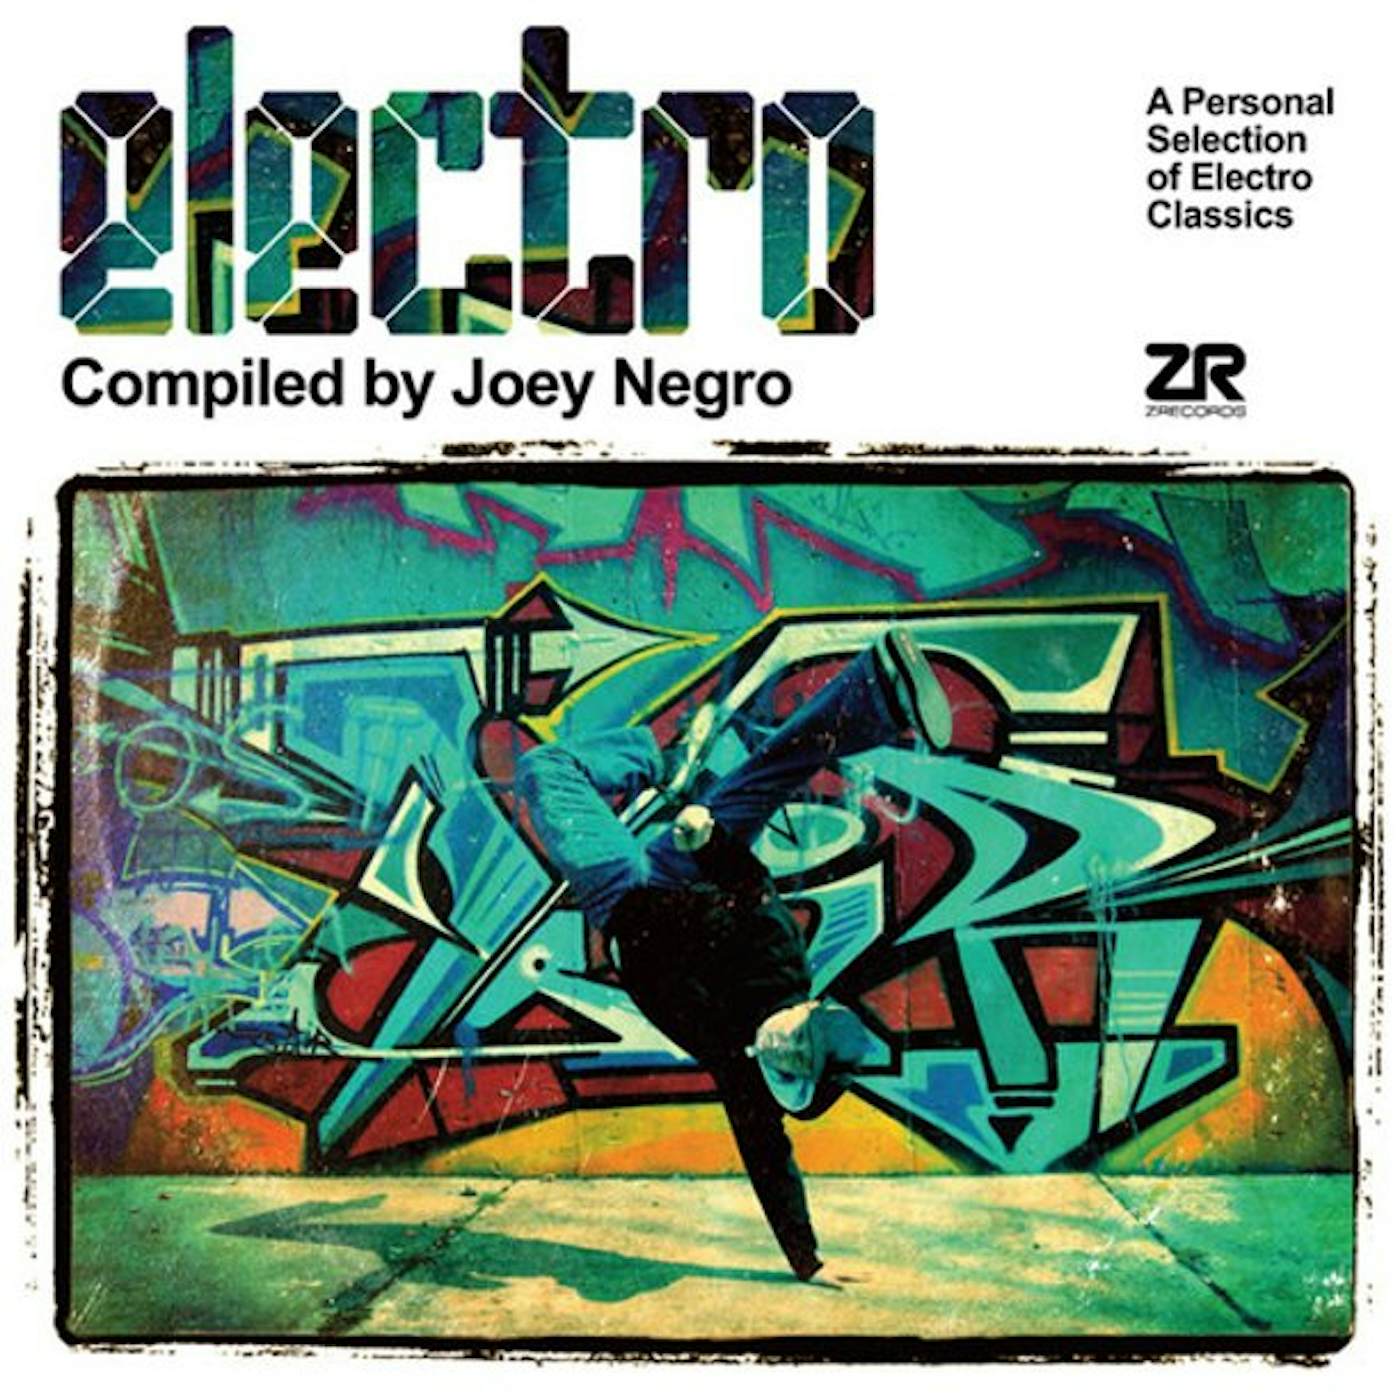 Joey Negro Electro: A Personal Selection Of Electro Classics Vinyl Record